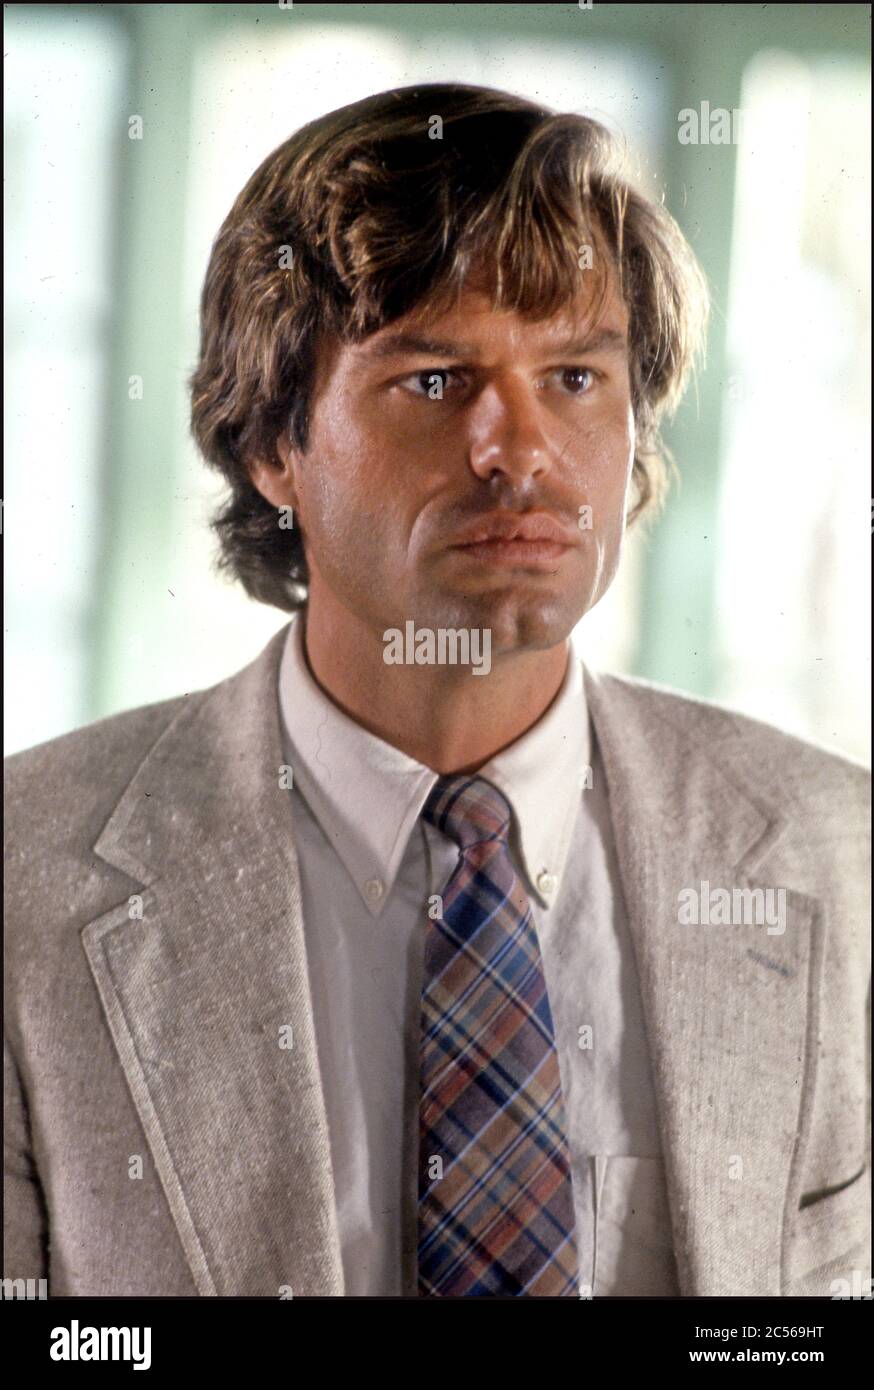 Actor Harry Hamlin acting in the movie Laguna Heat, 1986 Stock Photo